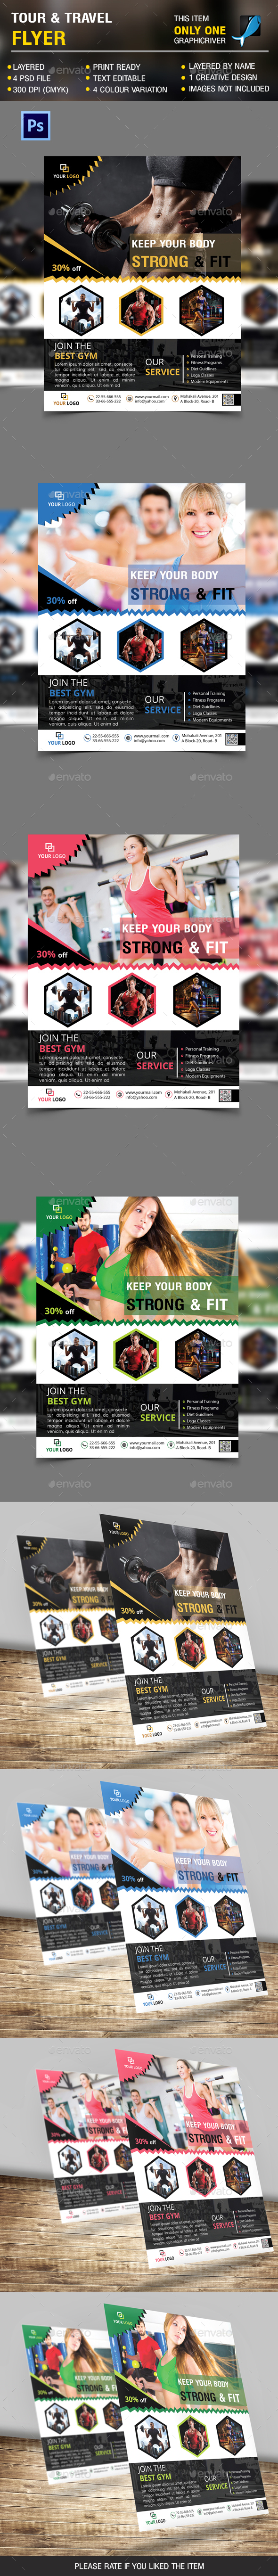 Fitness & Gym Flyer vol 3